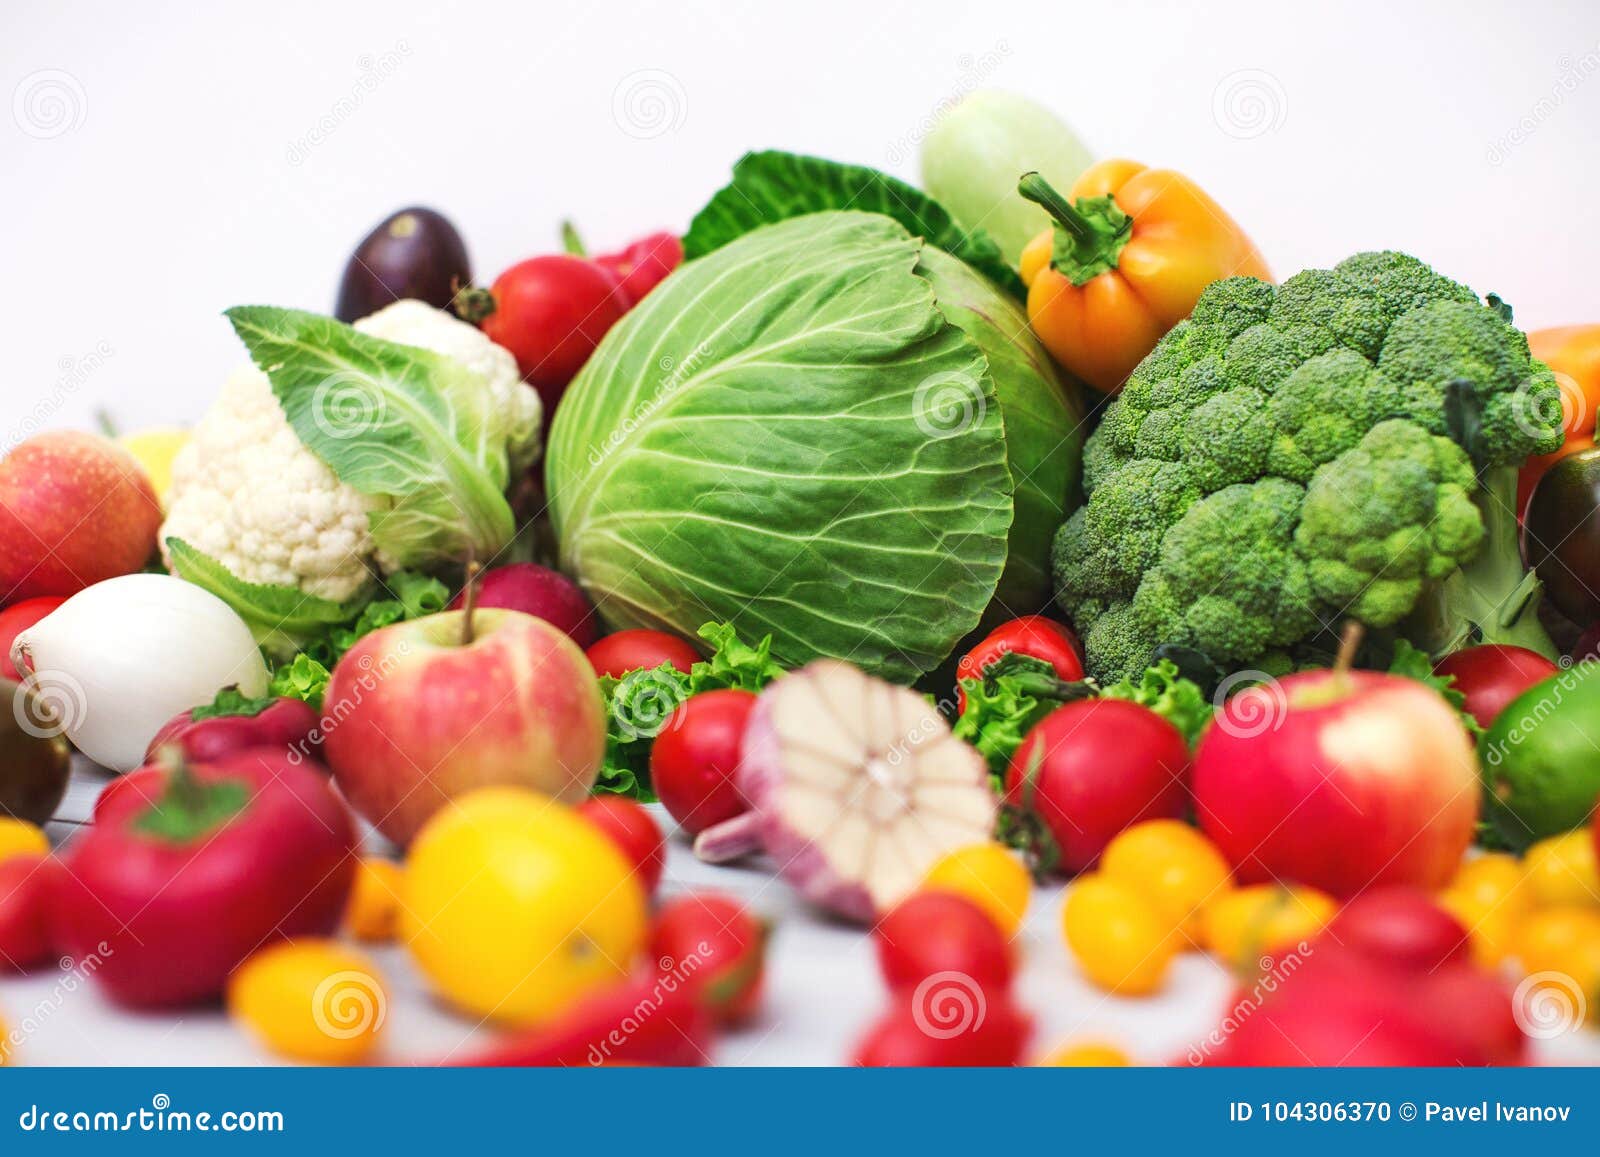 fresh raw organic vegetable produce.